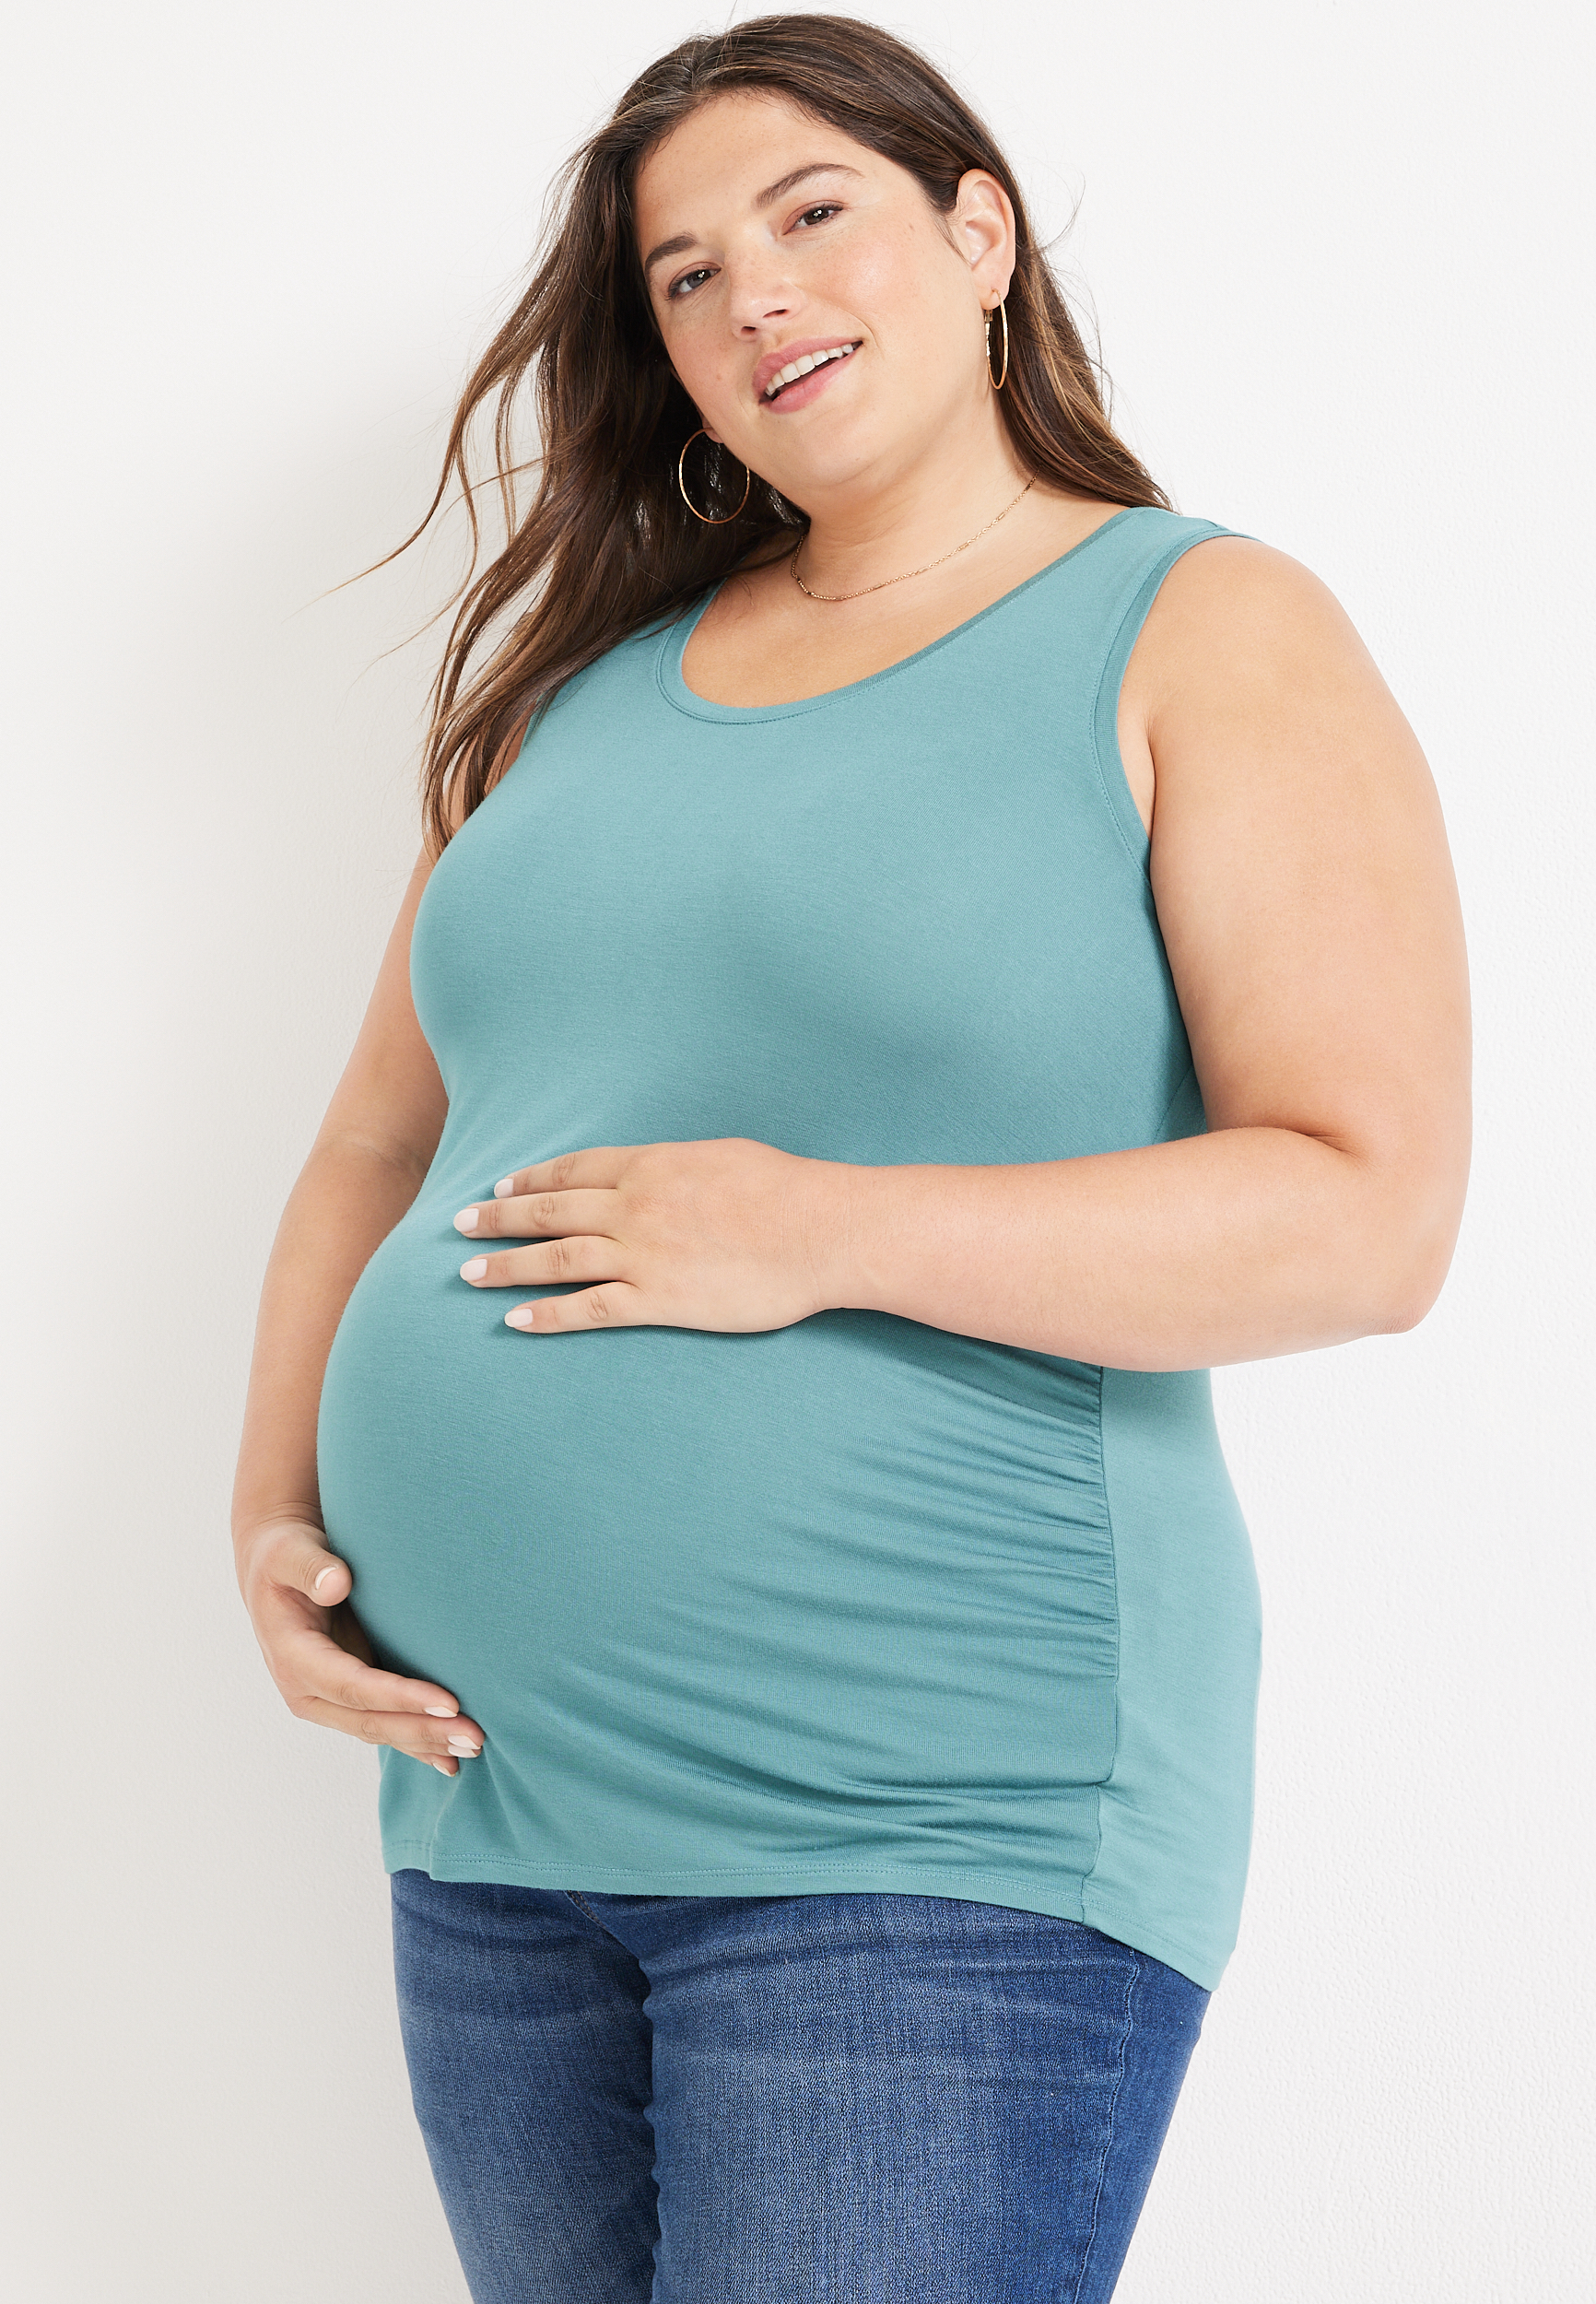 Plus Maternity — Plus size breastfeeding T Shirt